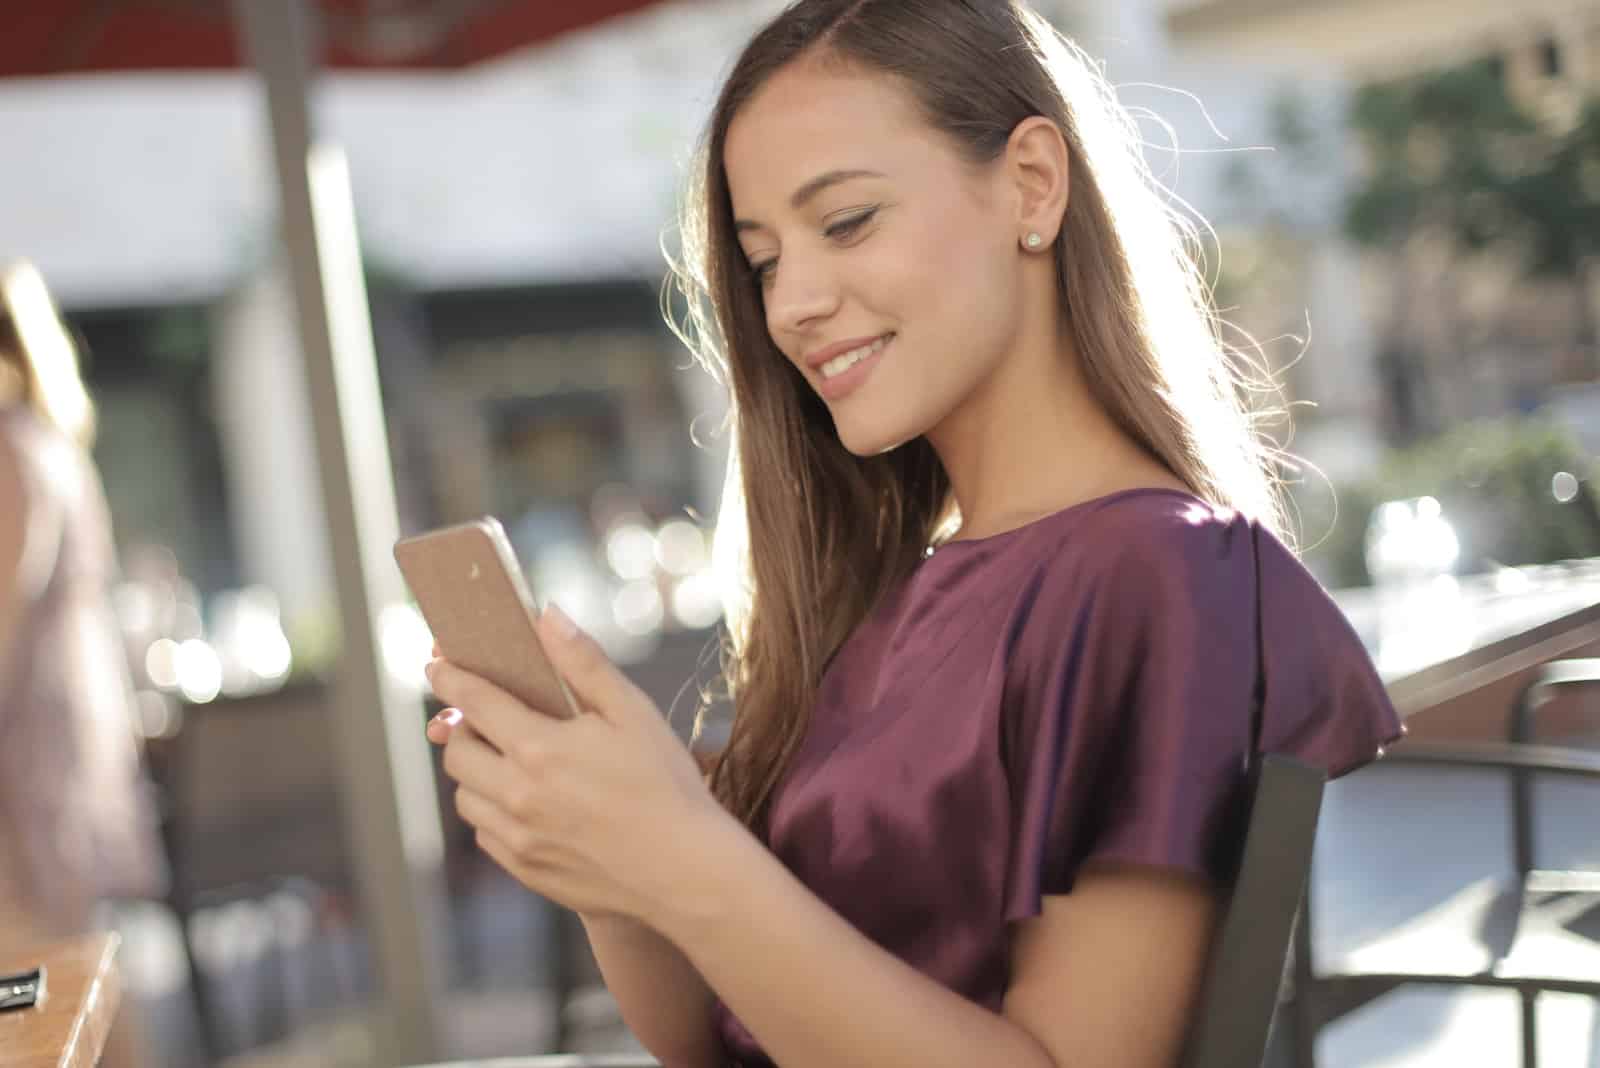 femme heureuse en blouse violette regardant un smartphone